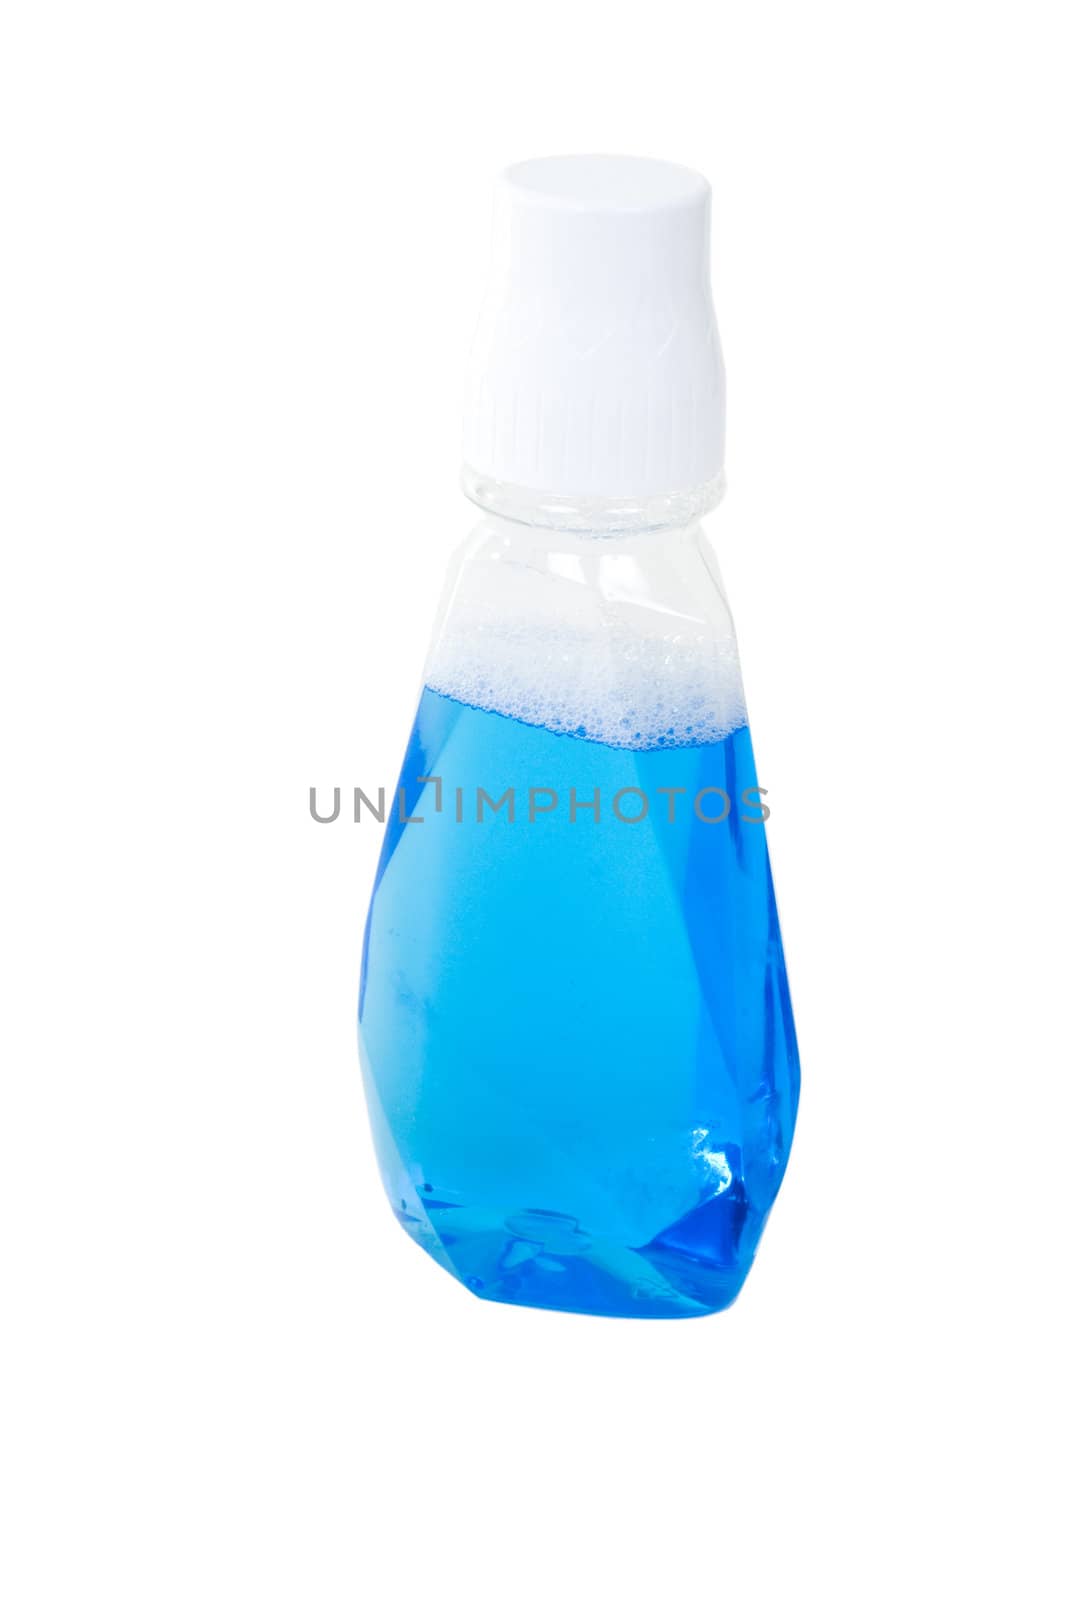 A half full plastic bottle of blue liquid.